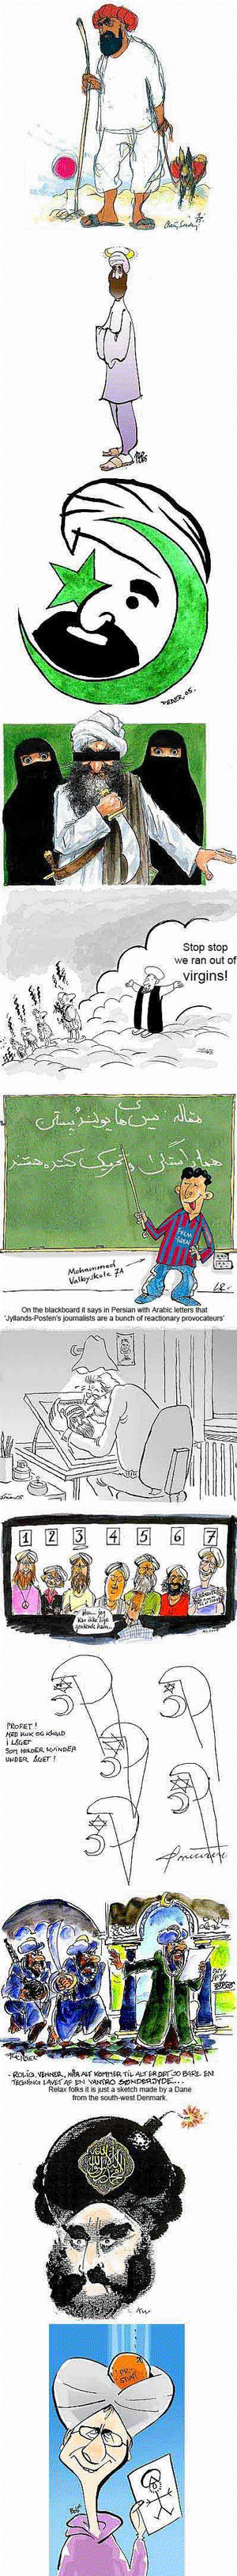 Mohammed-drawings-newspaper1.gif